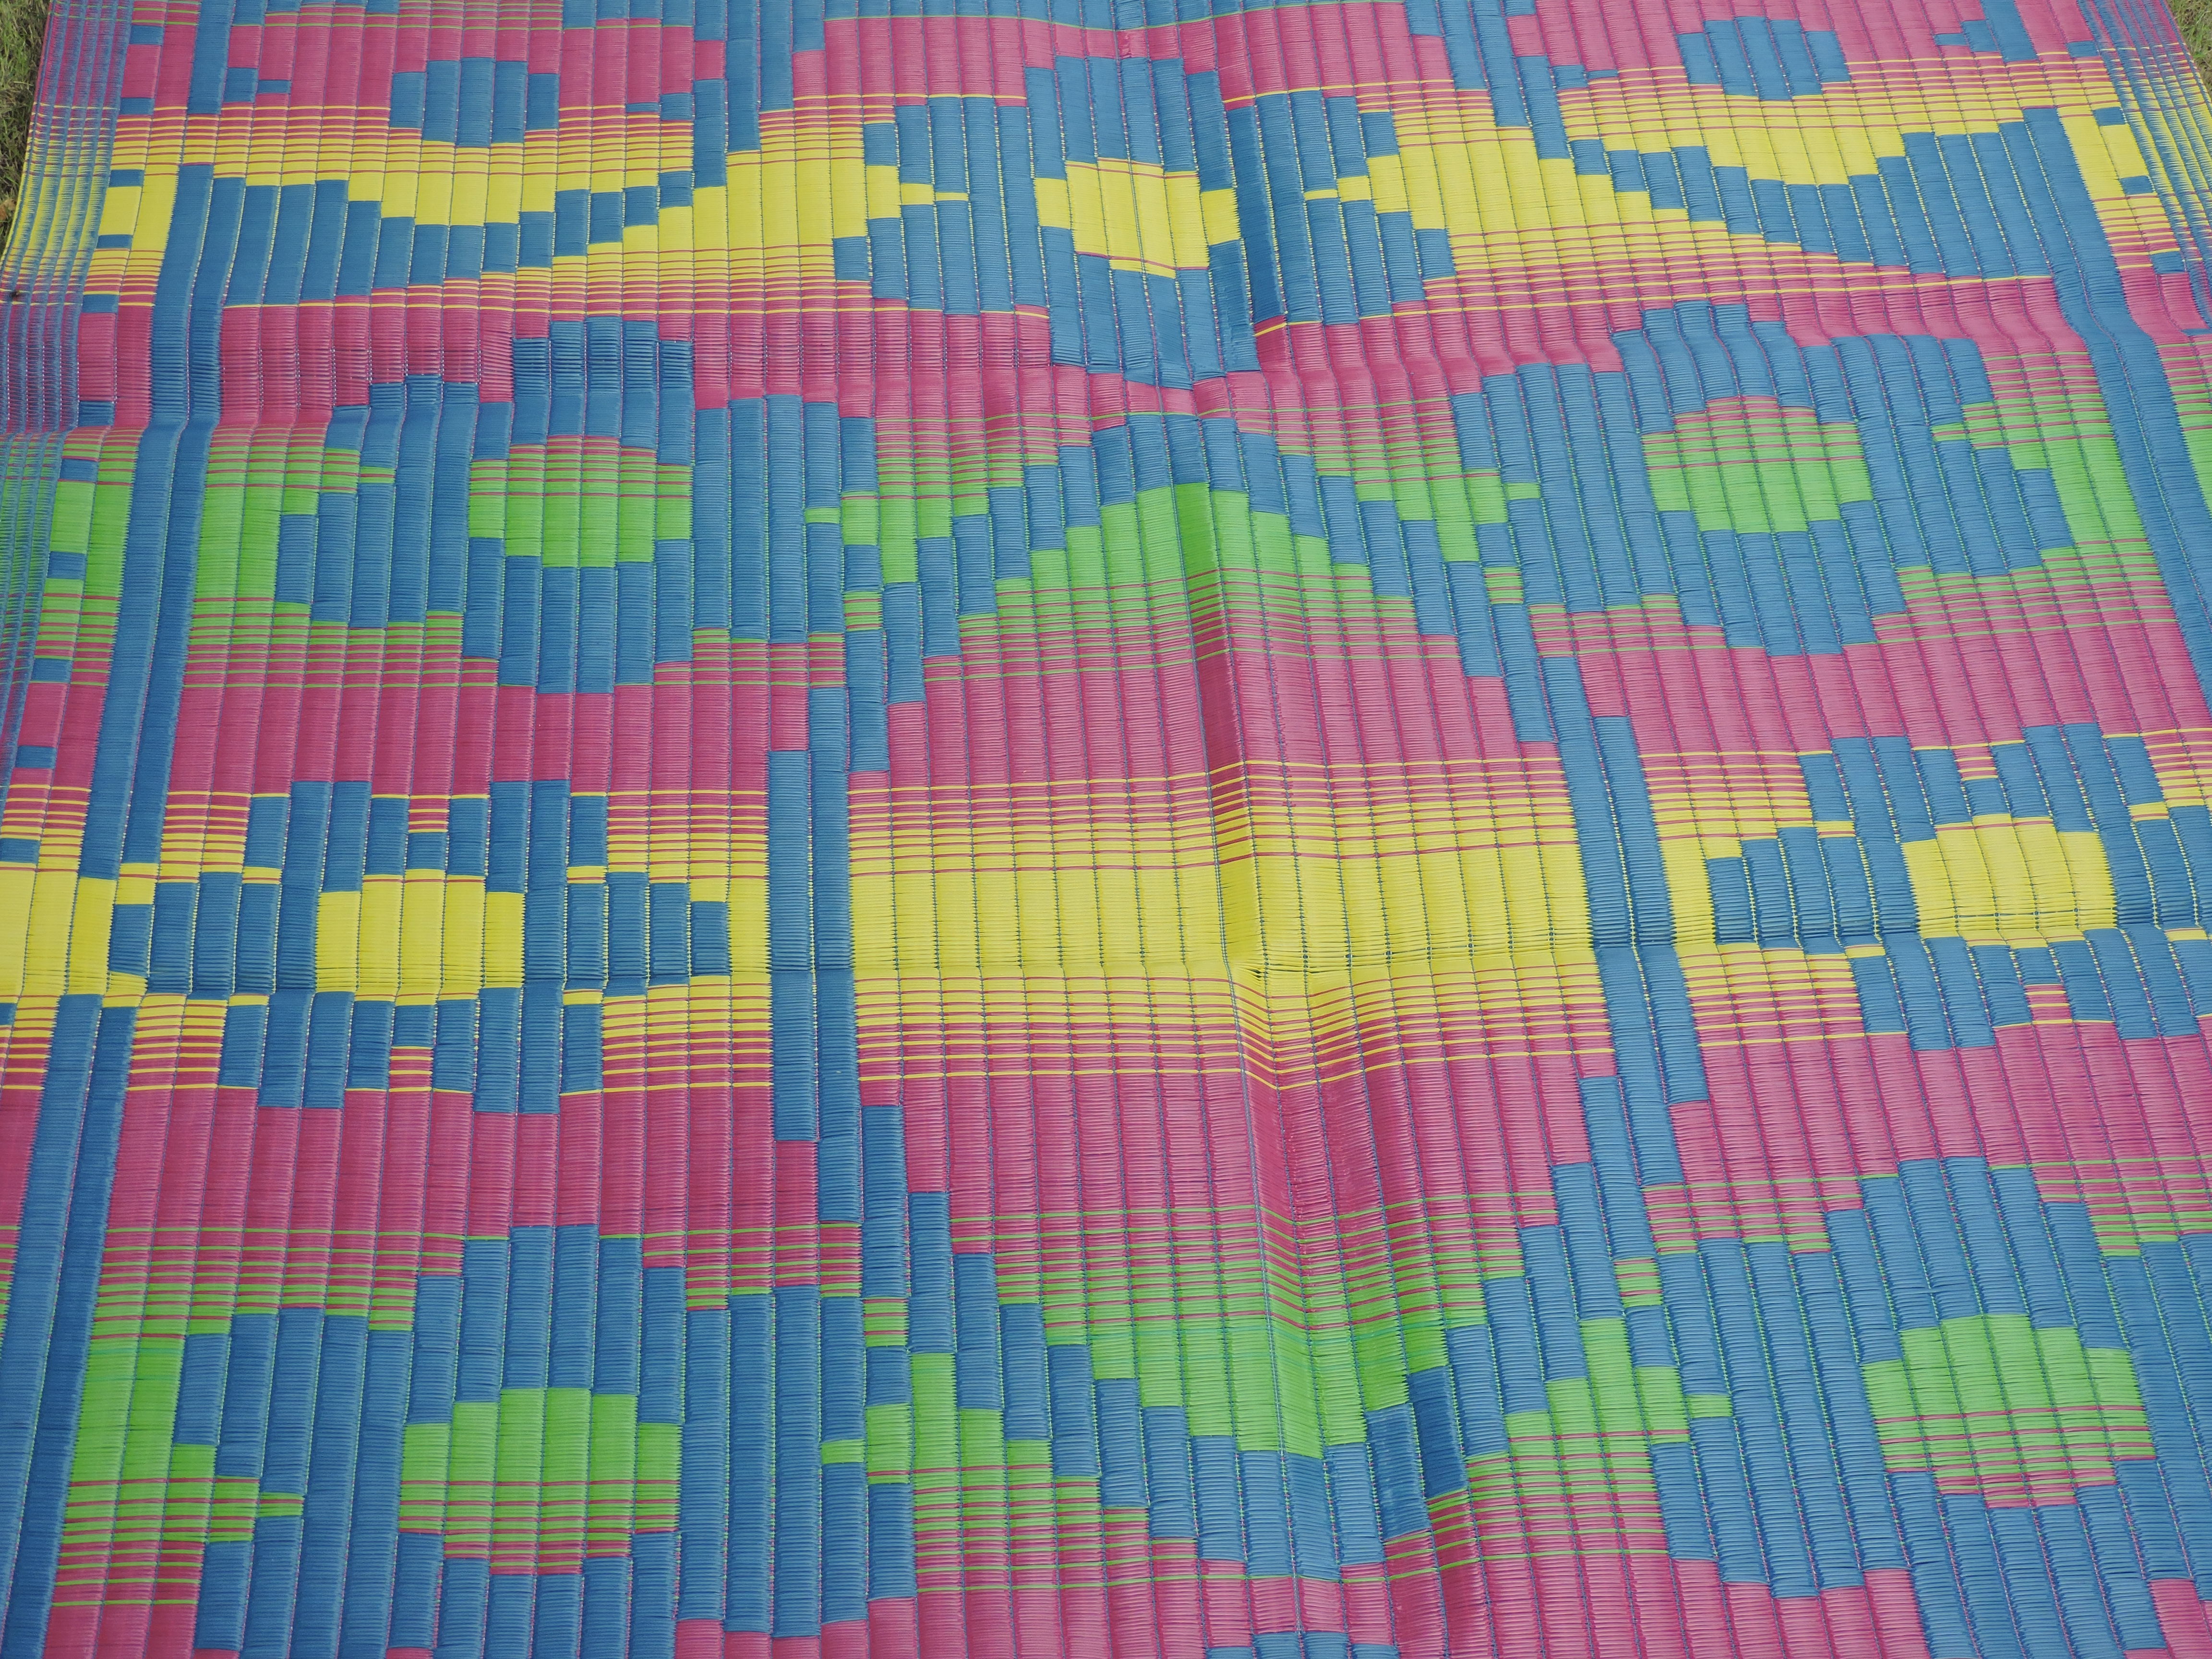 4x6 colored mat